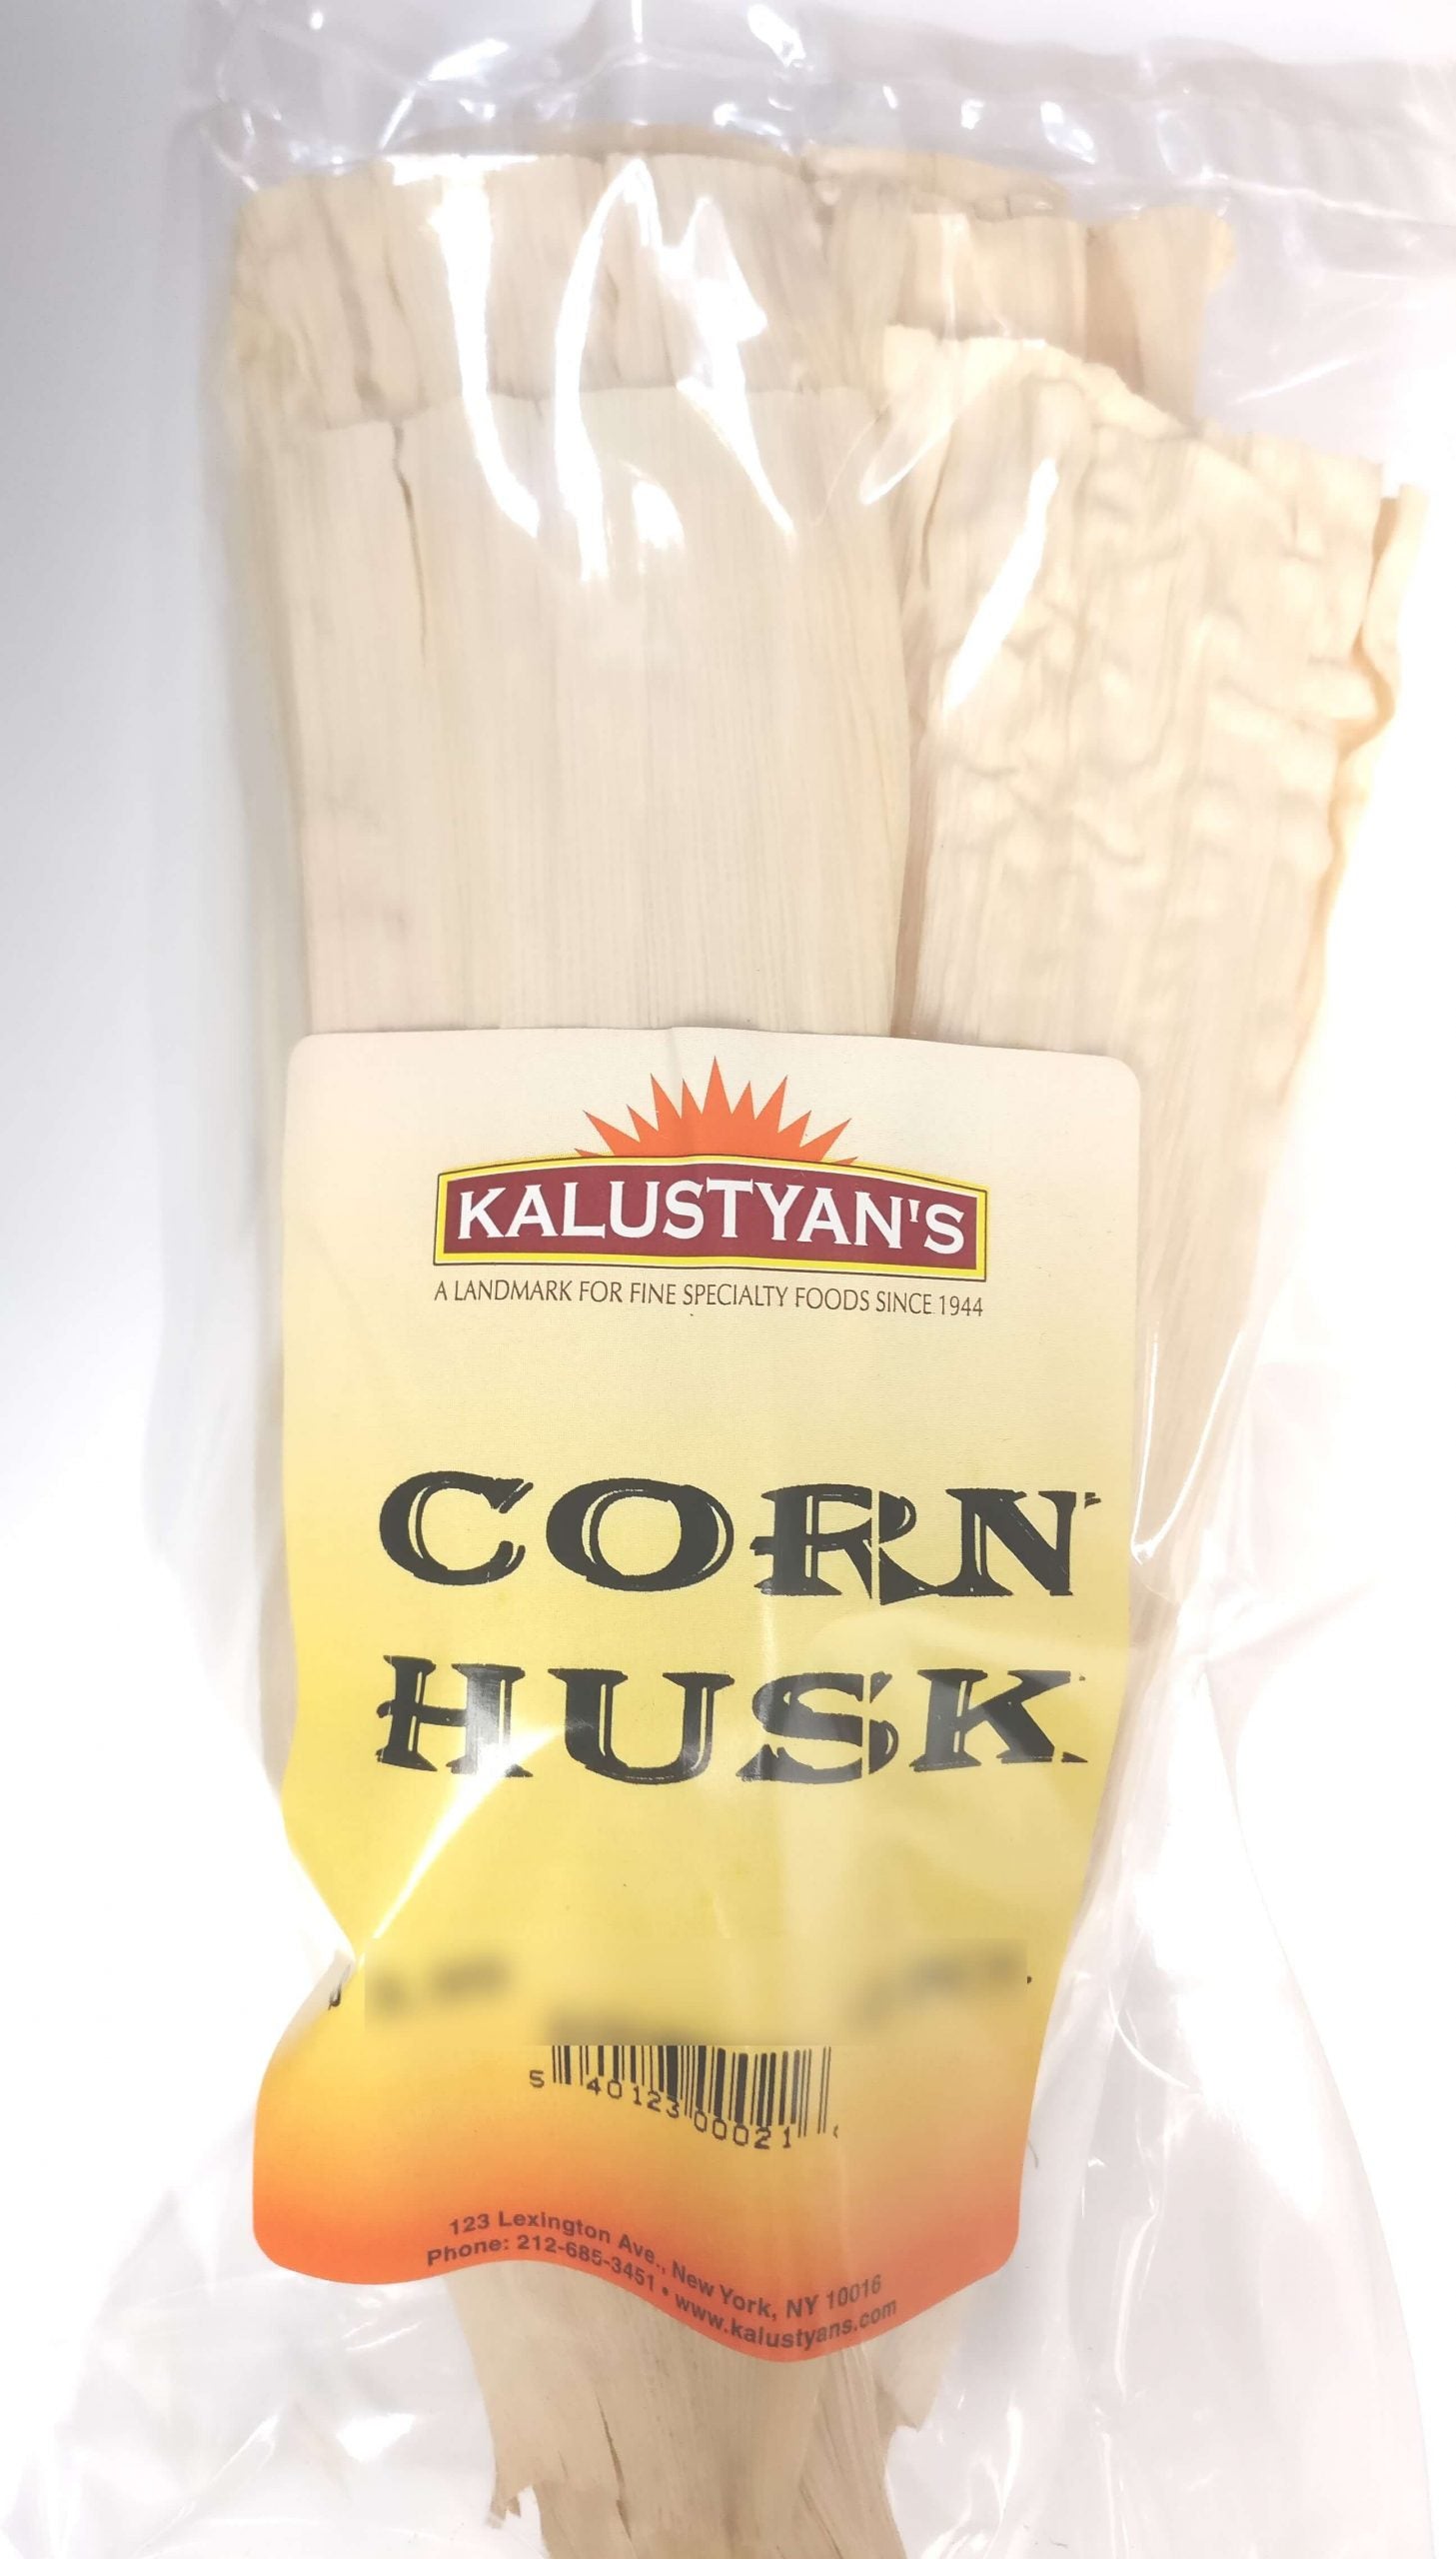 New Mexico Corn Husks – www.